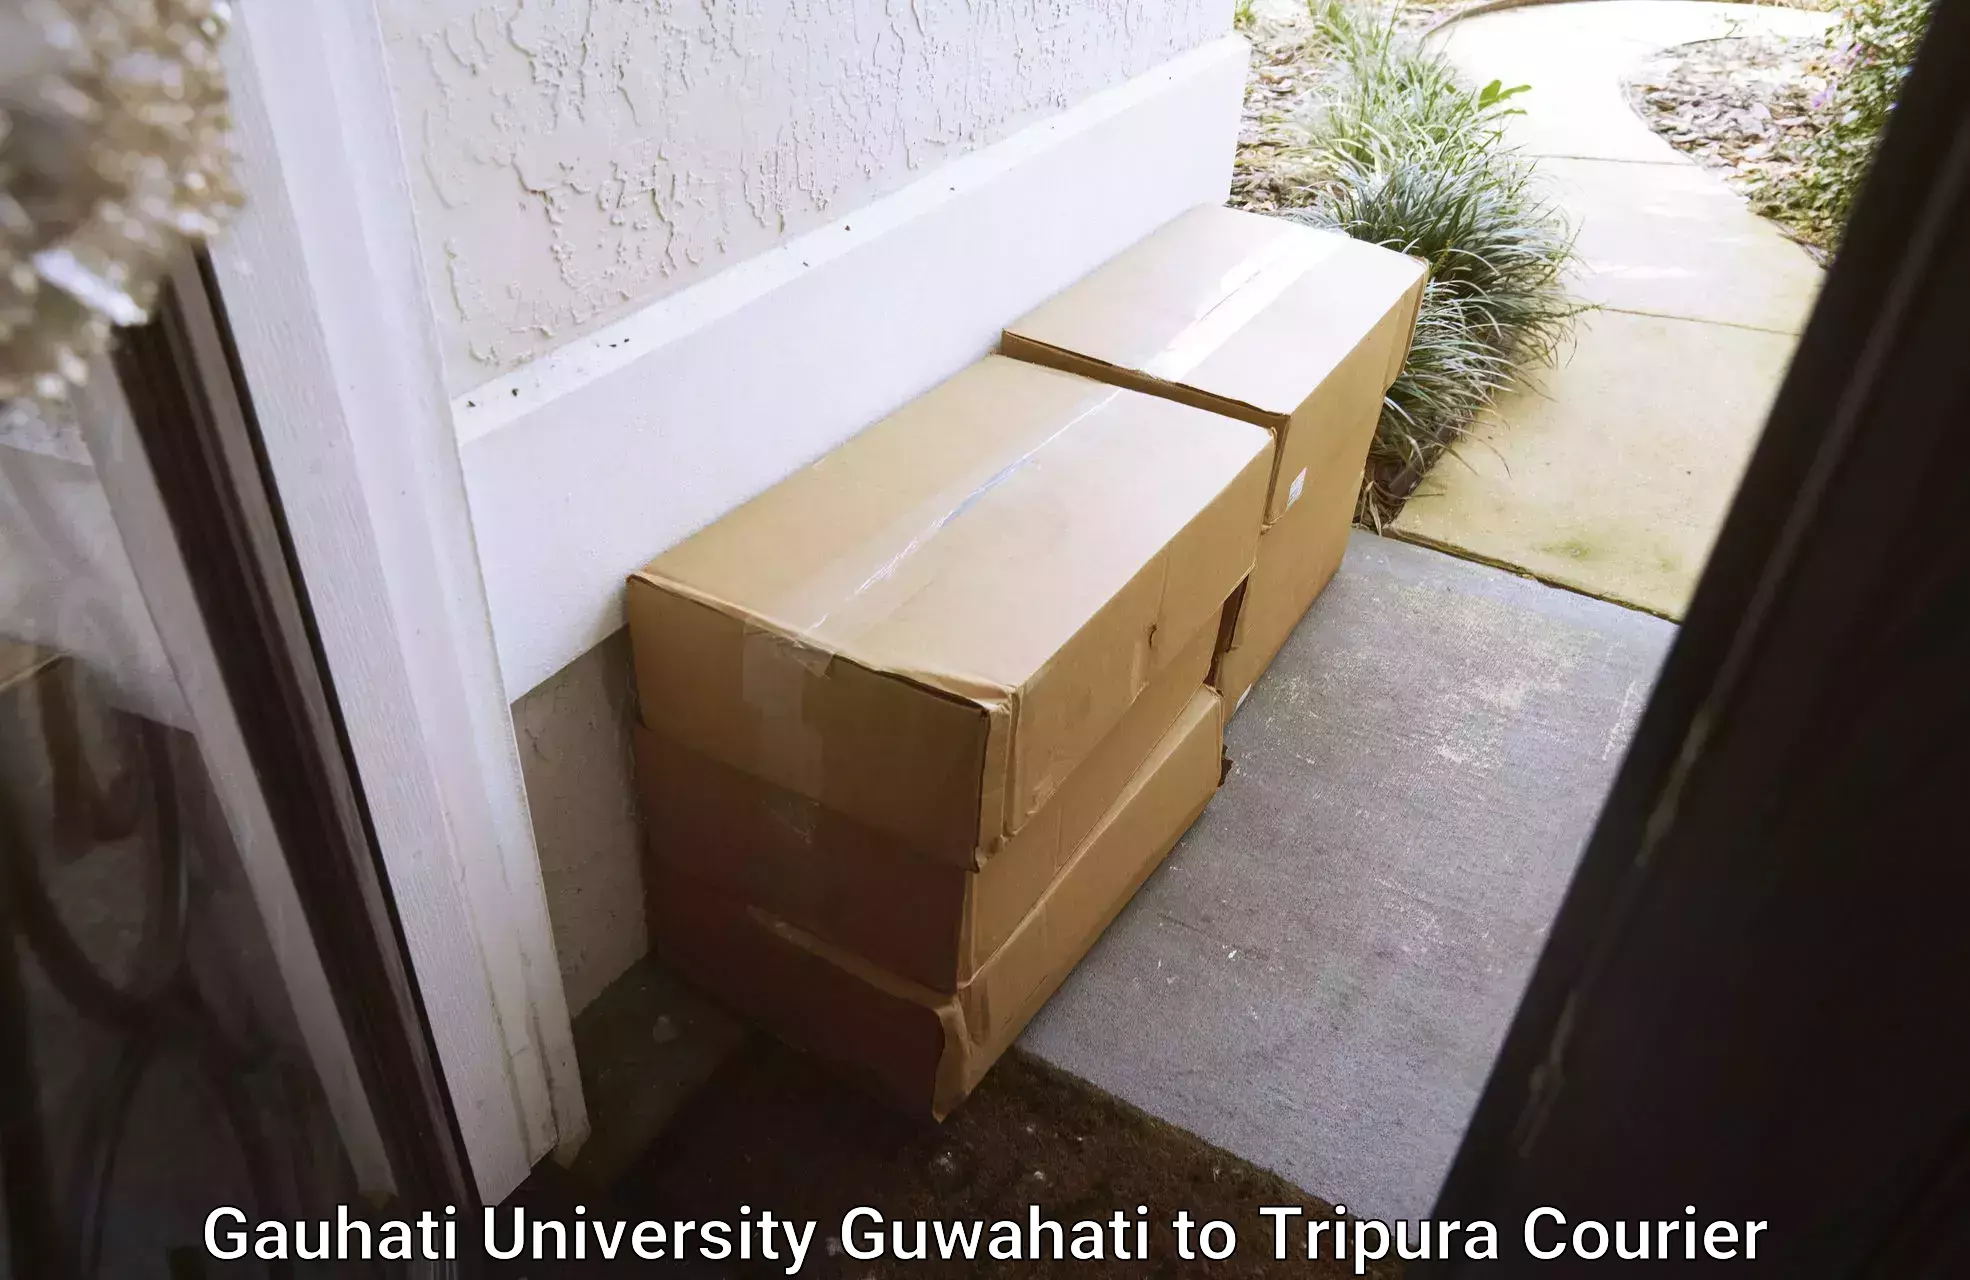 Cargo courier service Gauhati University Guwahati to Udaipur Tripura